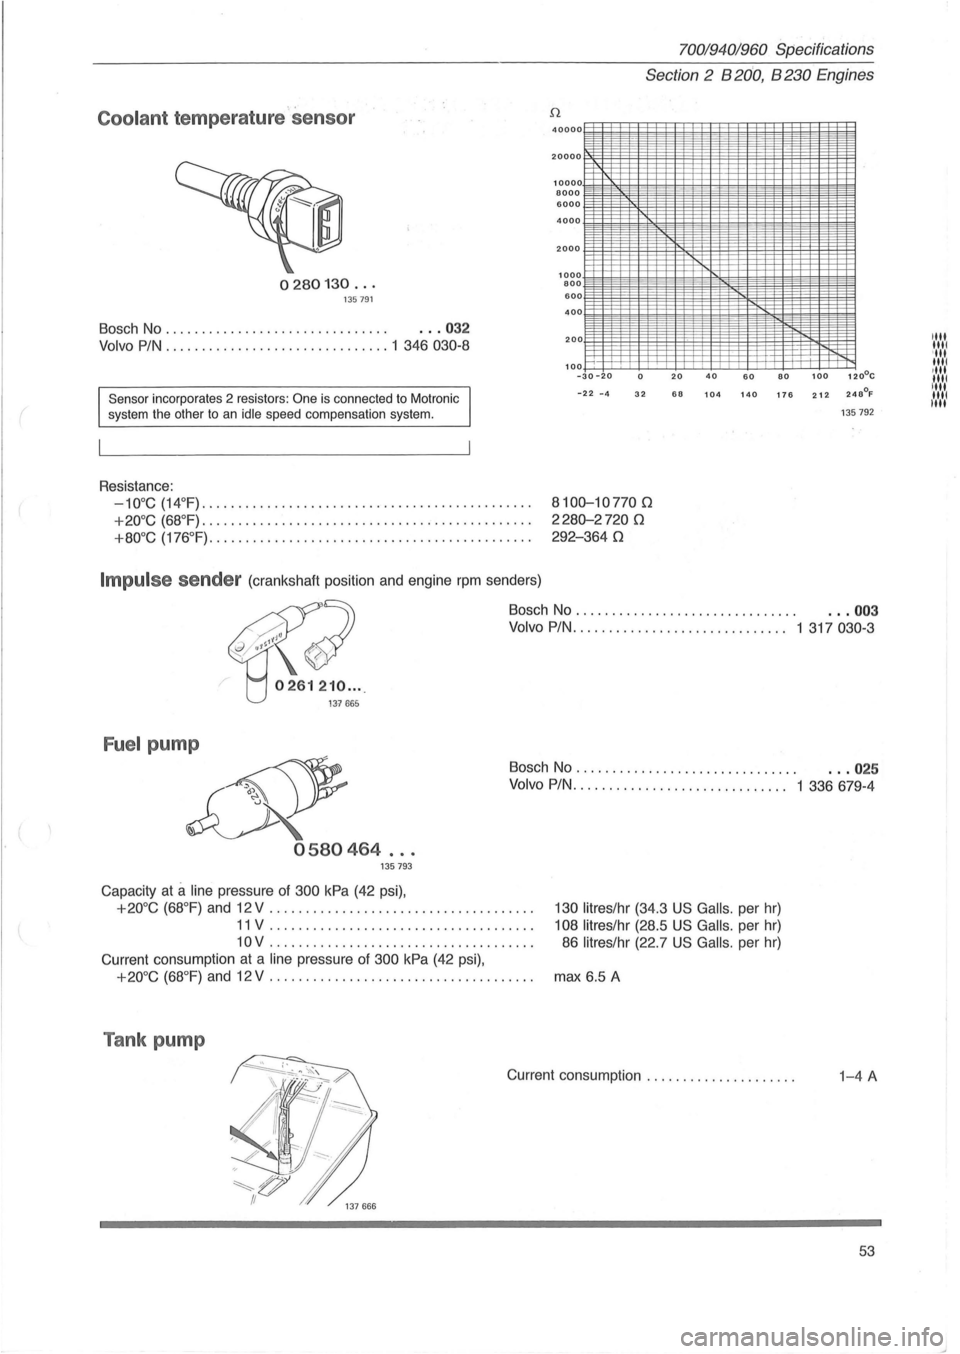 VOLVO 940 1982  Service Repair Manual Coolant temperature  sensor 
0280130 ... 135791 
Bosch  No . , ..... , .... , .. , . , ........... , .  . .. 032 
Volvo  PIN , .... , . , , , .. , , . , .. , , .. , .. , ... , . 1  346 030-8 
Sensor 